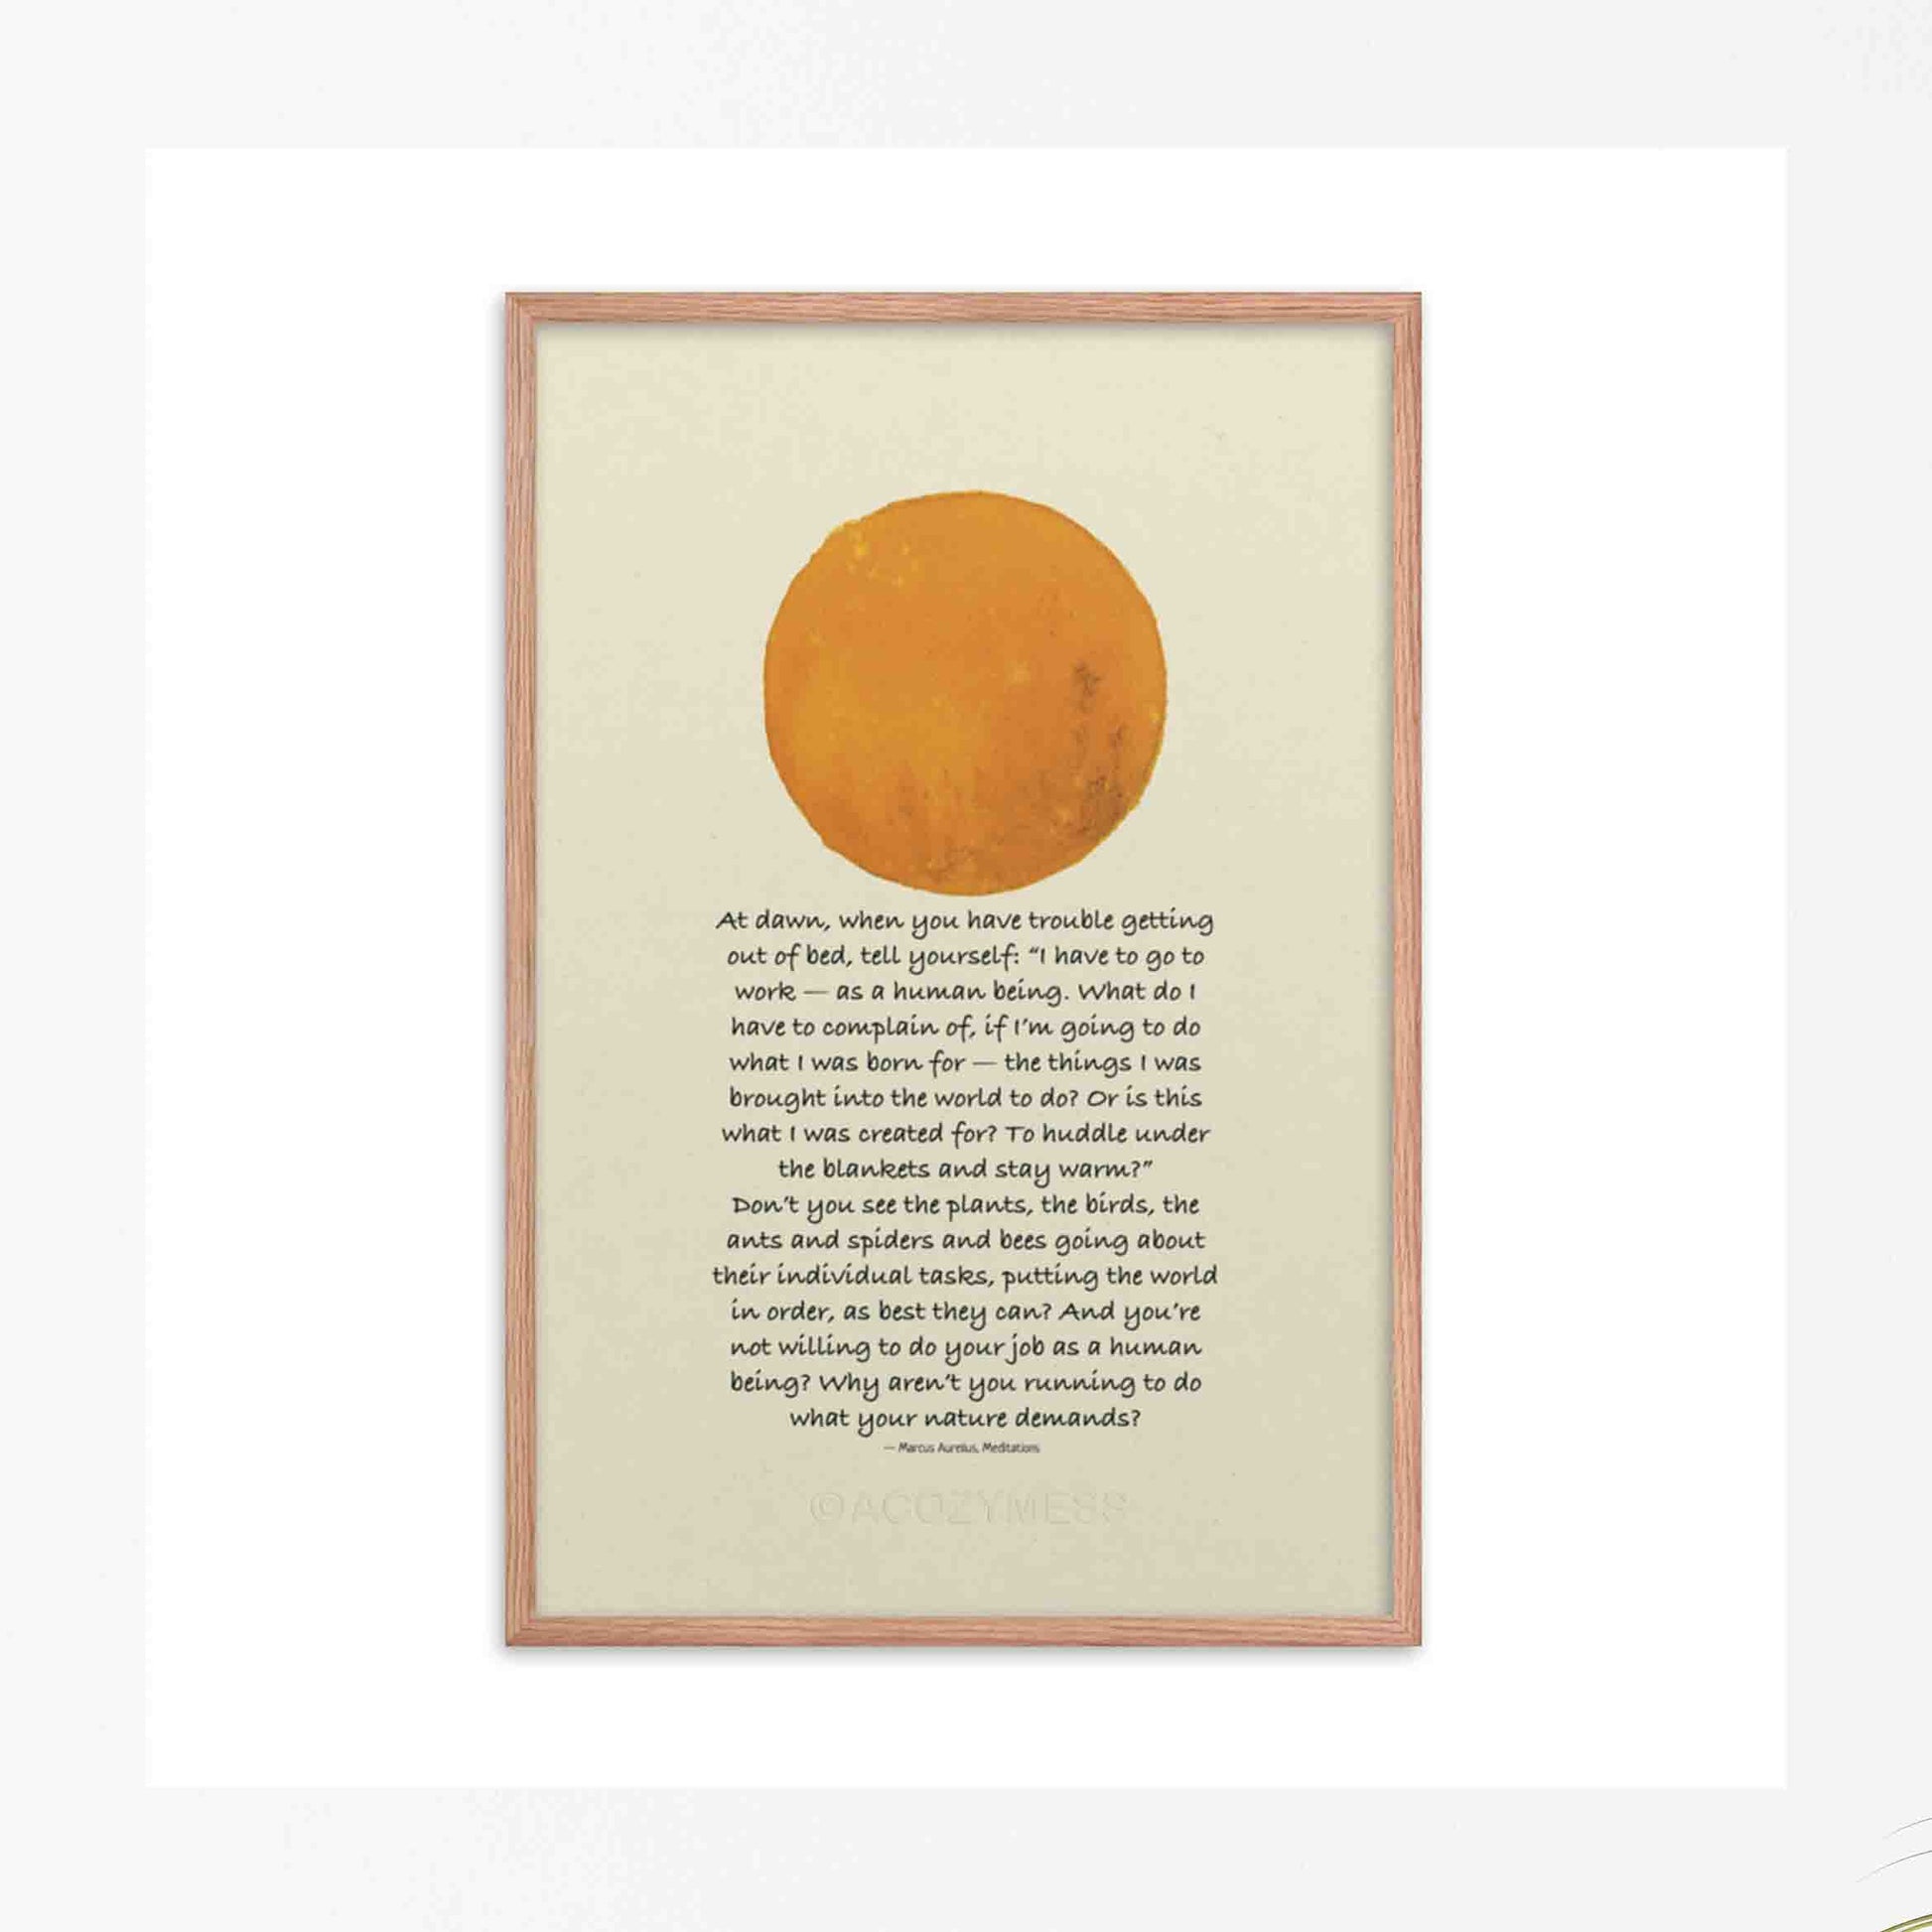 Morning Motivation marcus aurelius framed poster in oak wood with sun illustration